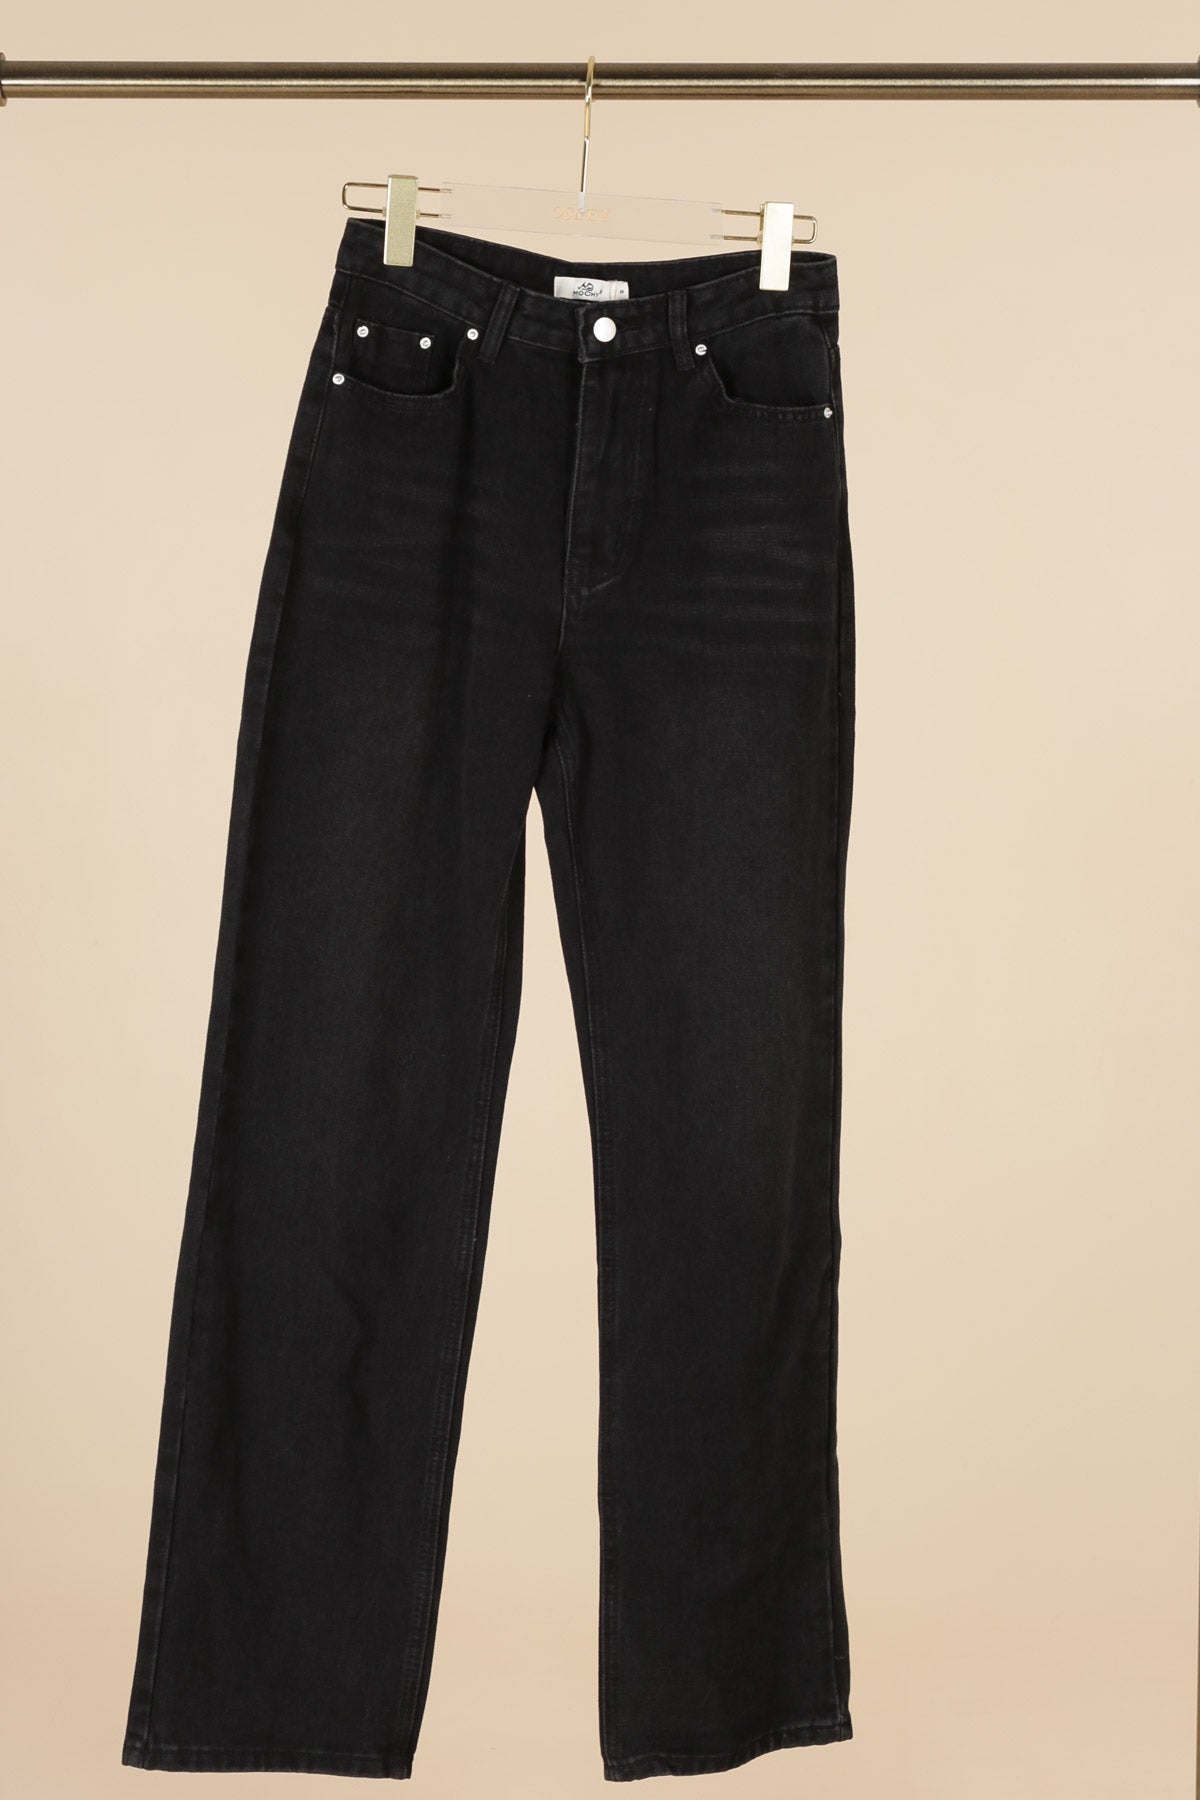 High Waist Black Jeans - NIXII Clothing